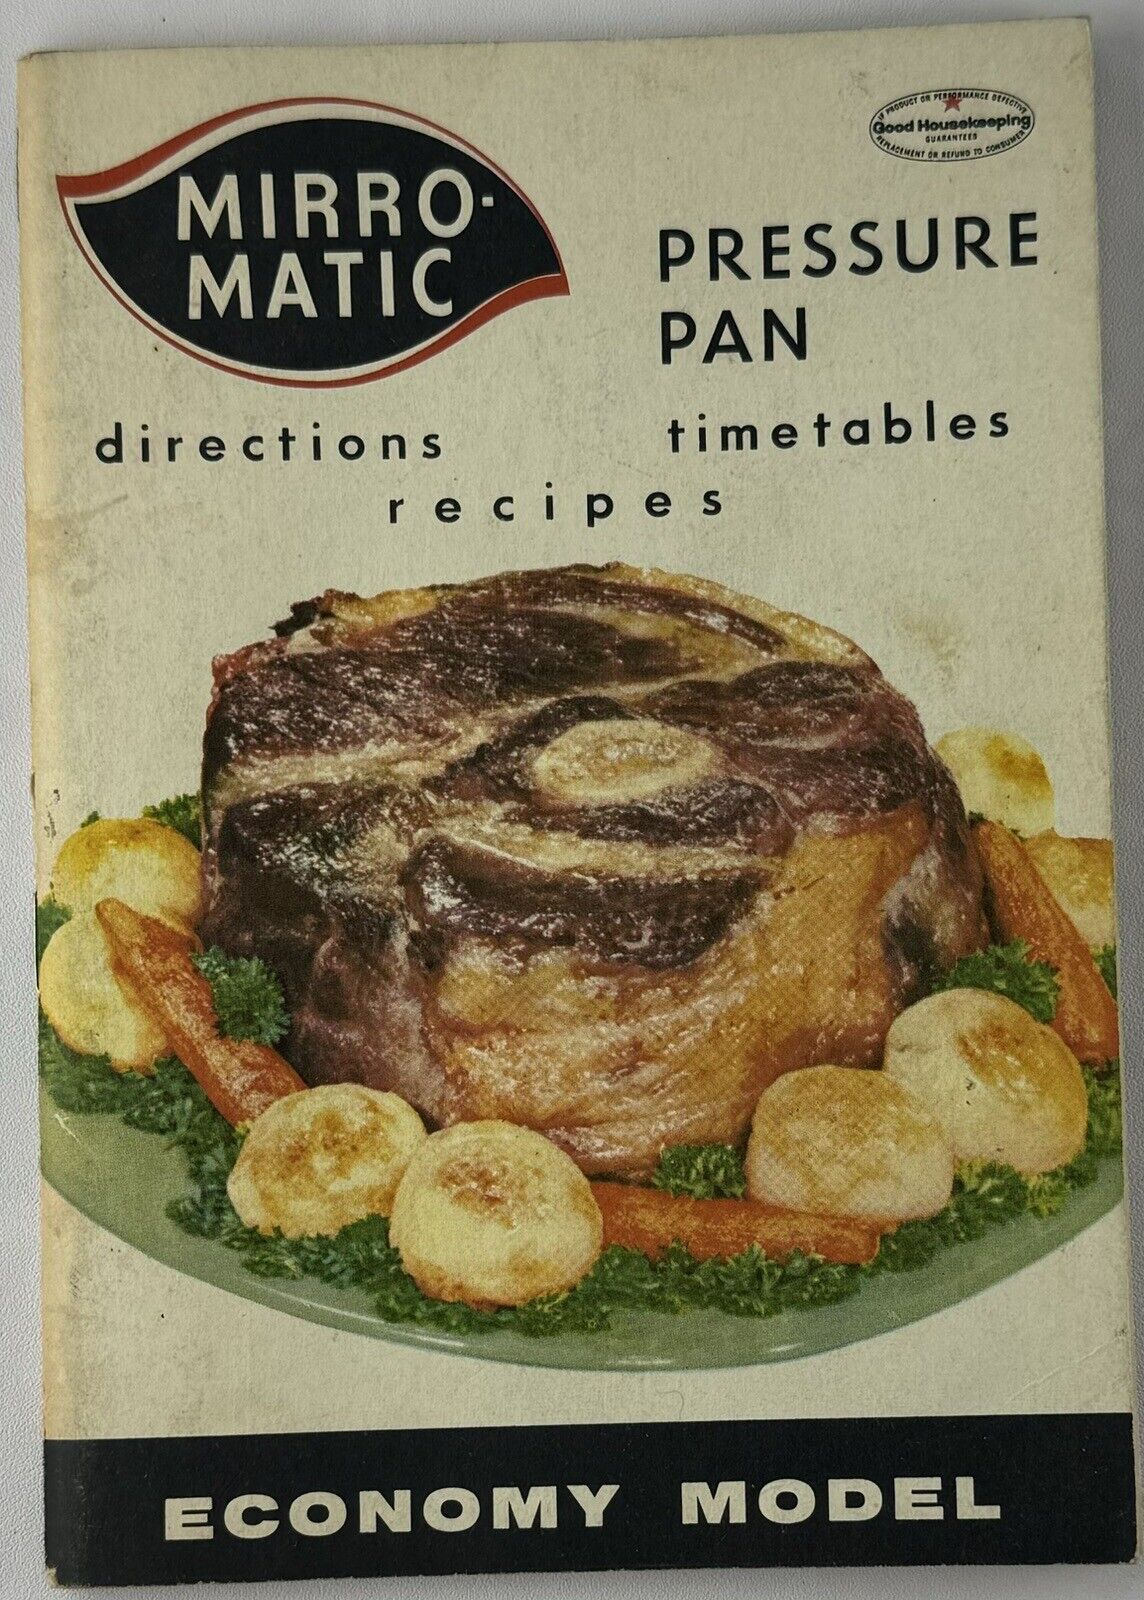 VTG 1961 Mirro Matic Pressure Pan Economy Model Directions Recipes Timetables